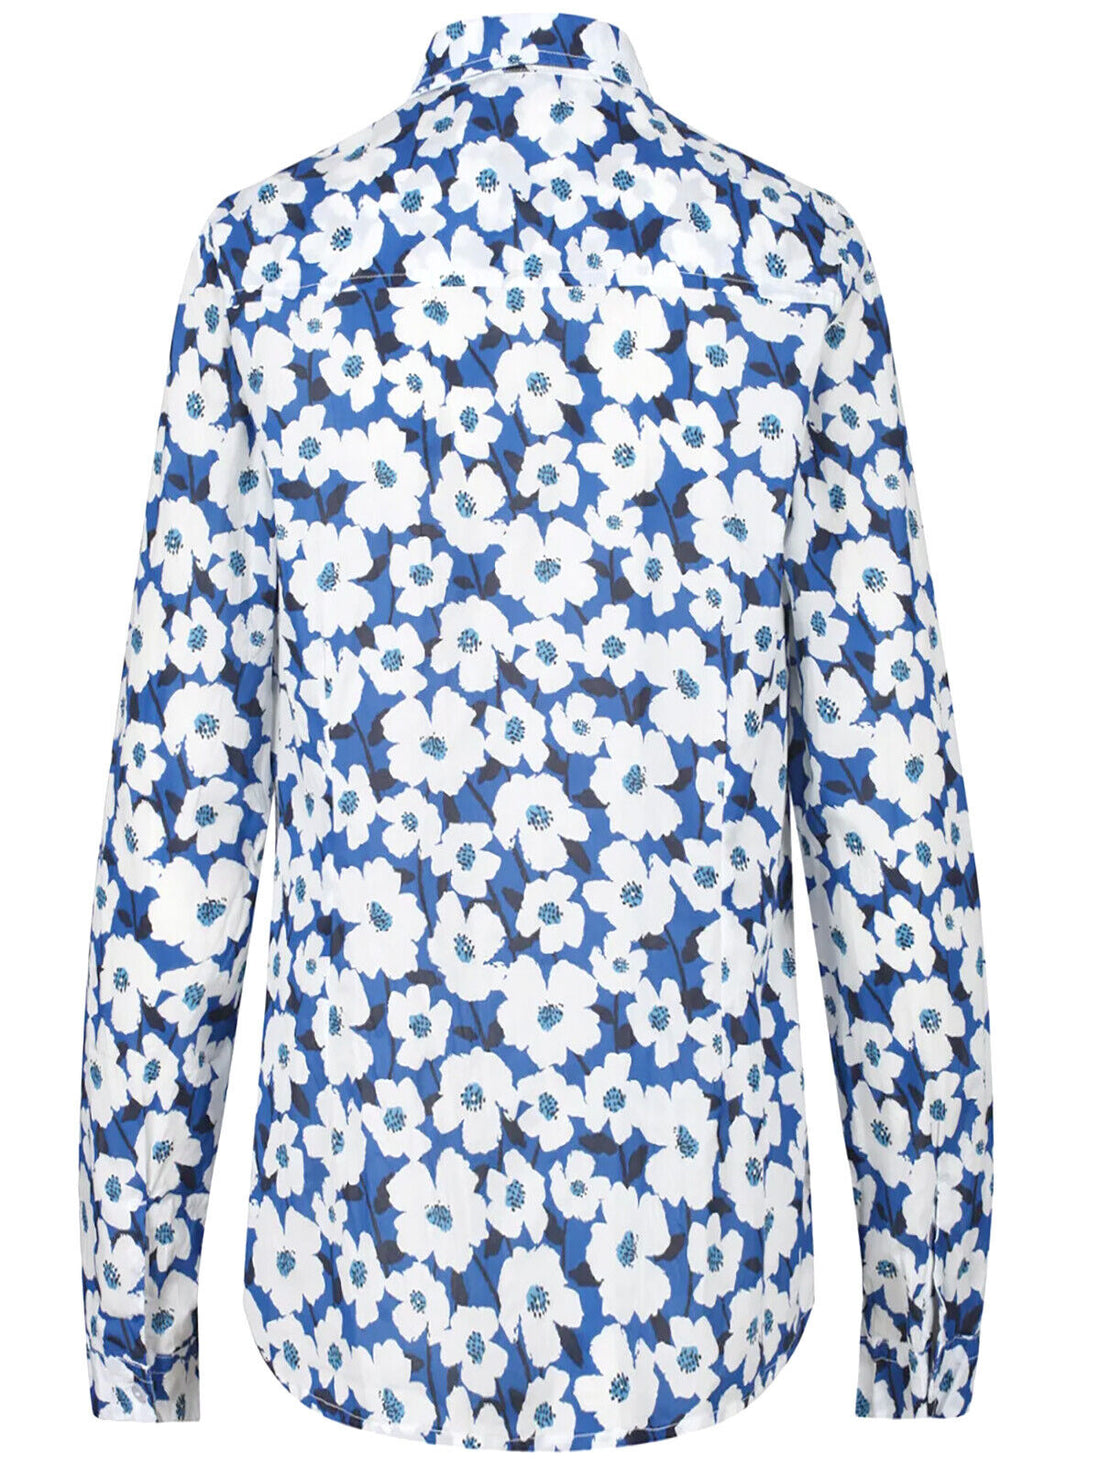 SEASALT Mallow Flower Cargo Crinkle Cotton Larissa Shirt Sizes 8, 10, 12, 16